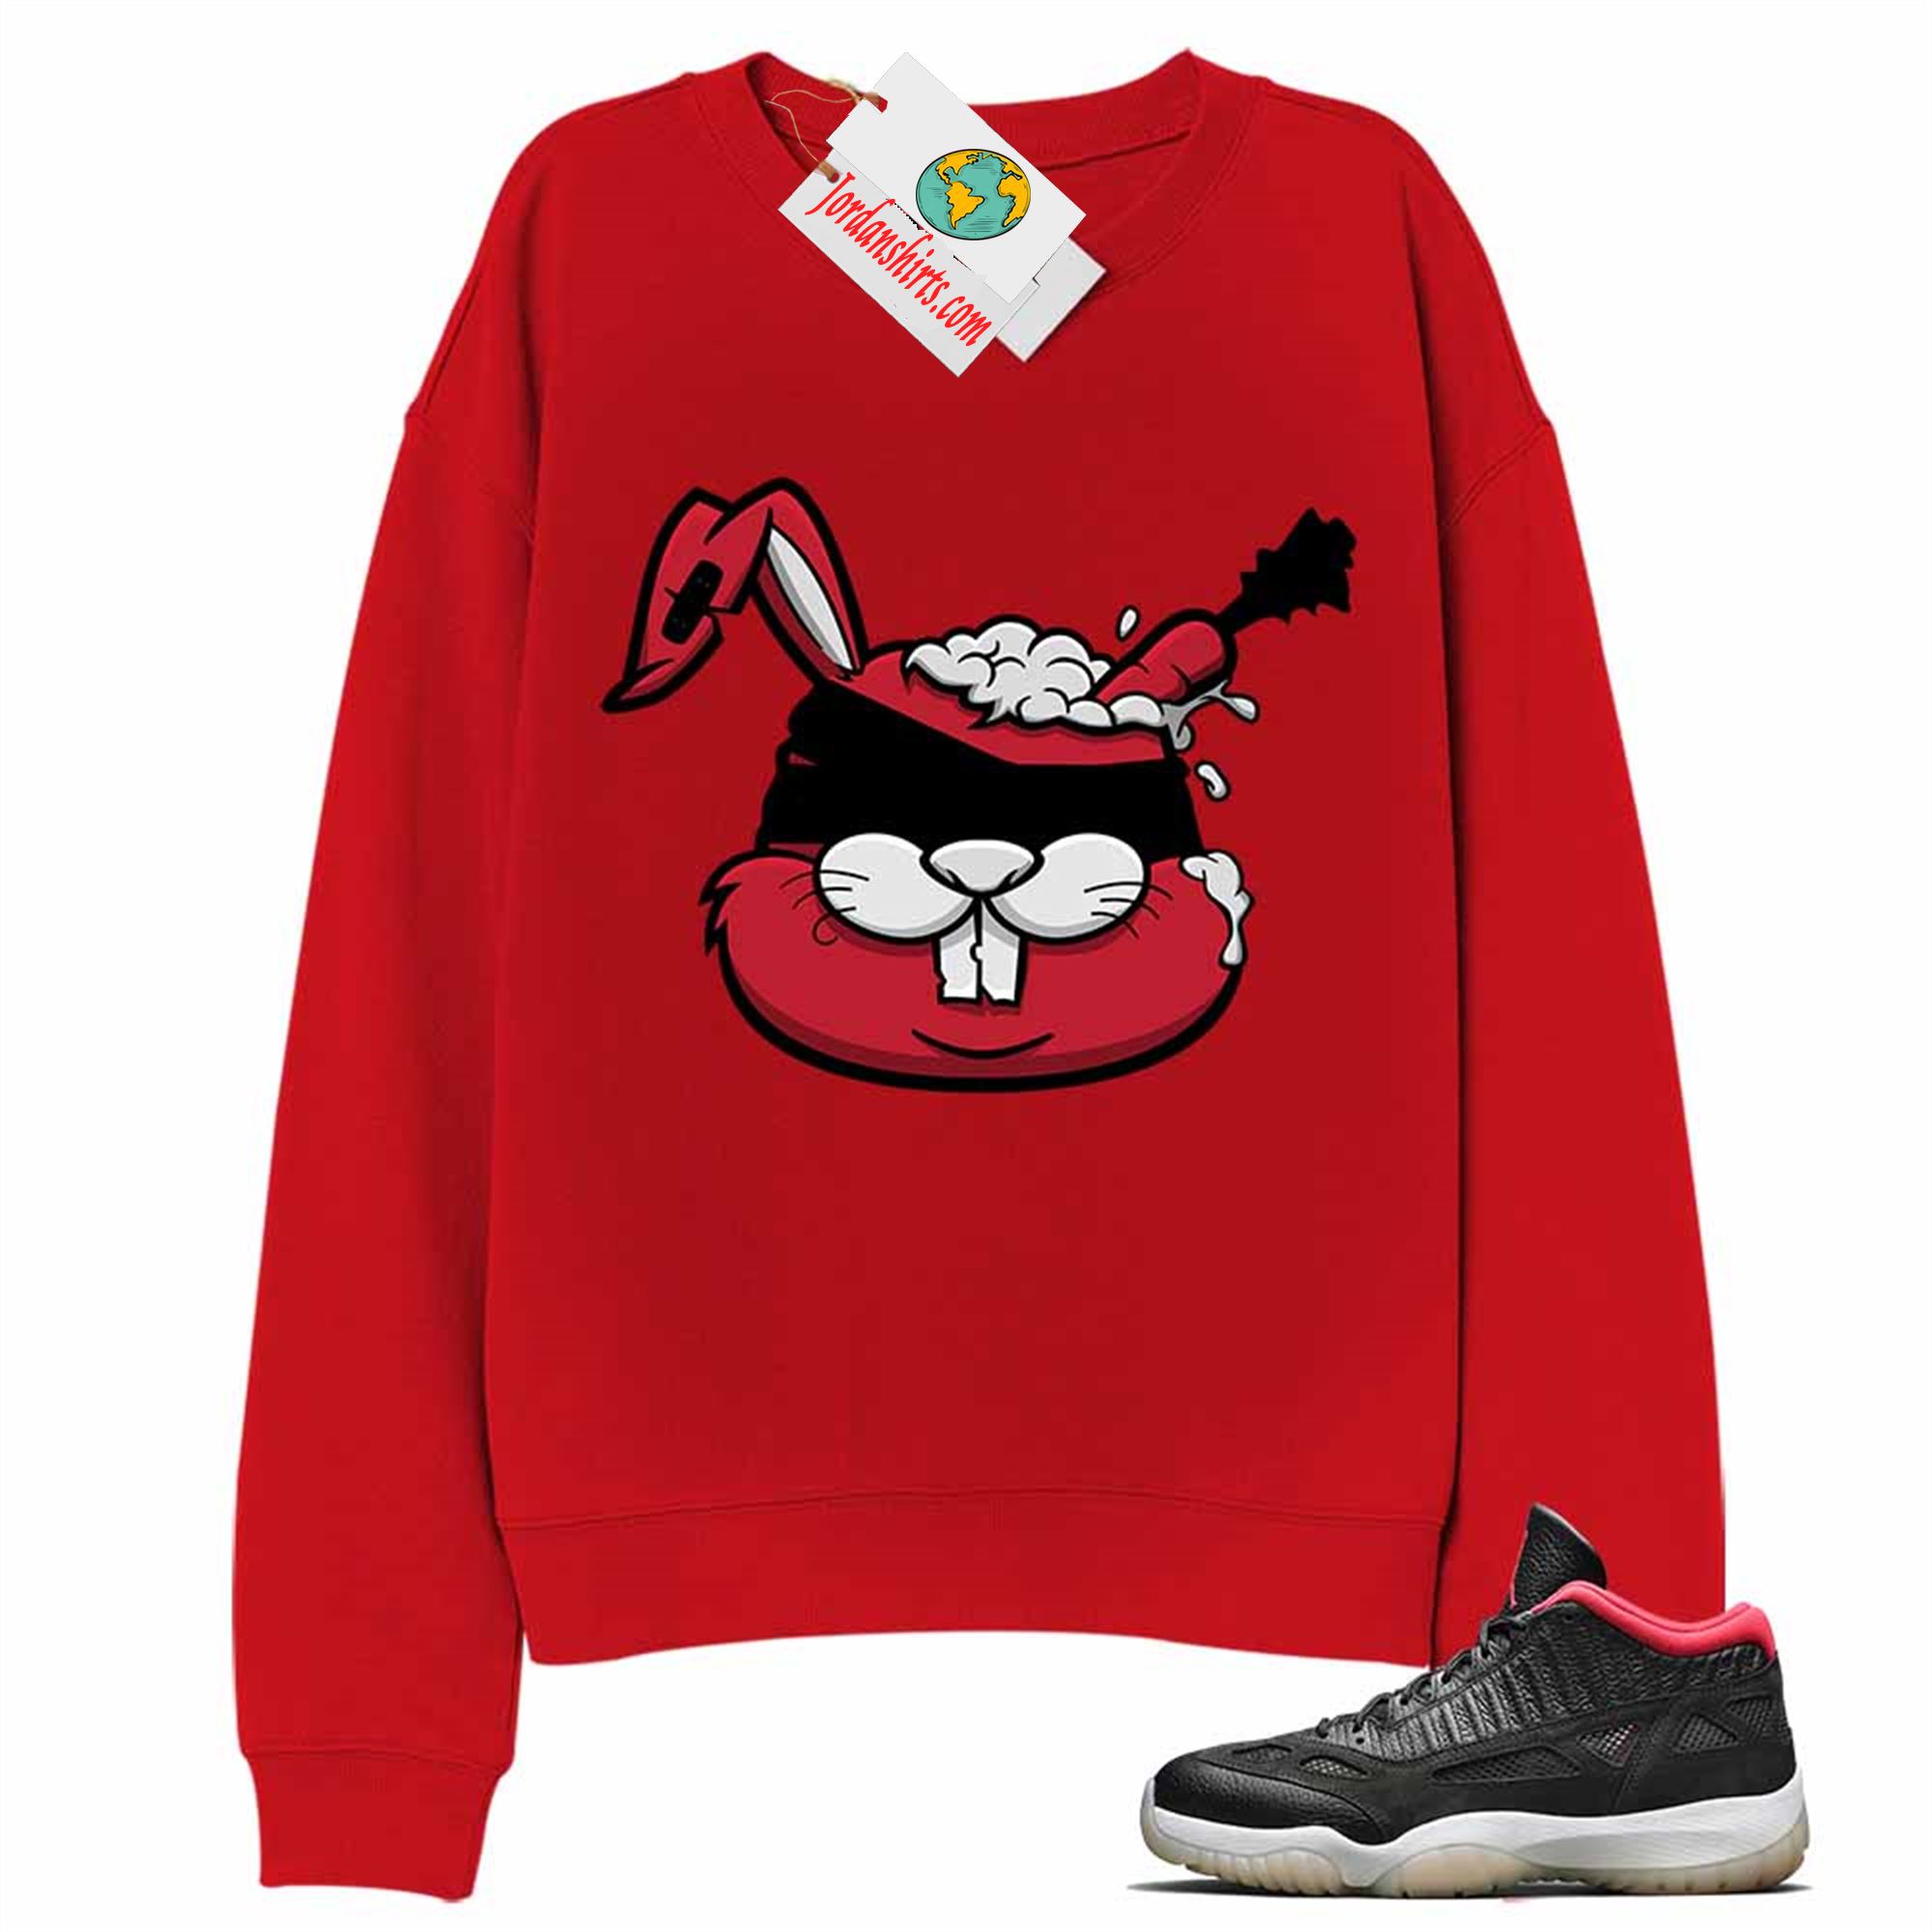 Jordan 11 Sweatshirt, Zombie Bunny Red Sweatshirt Air Jordan 11 Bred 11s Size Up To 5xl